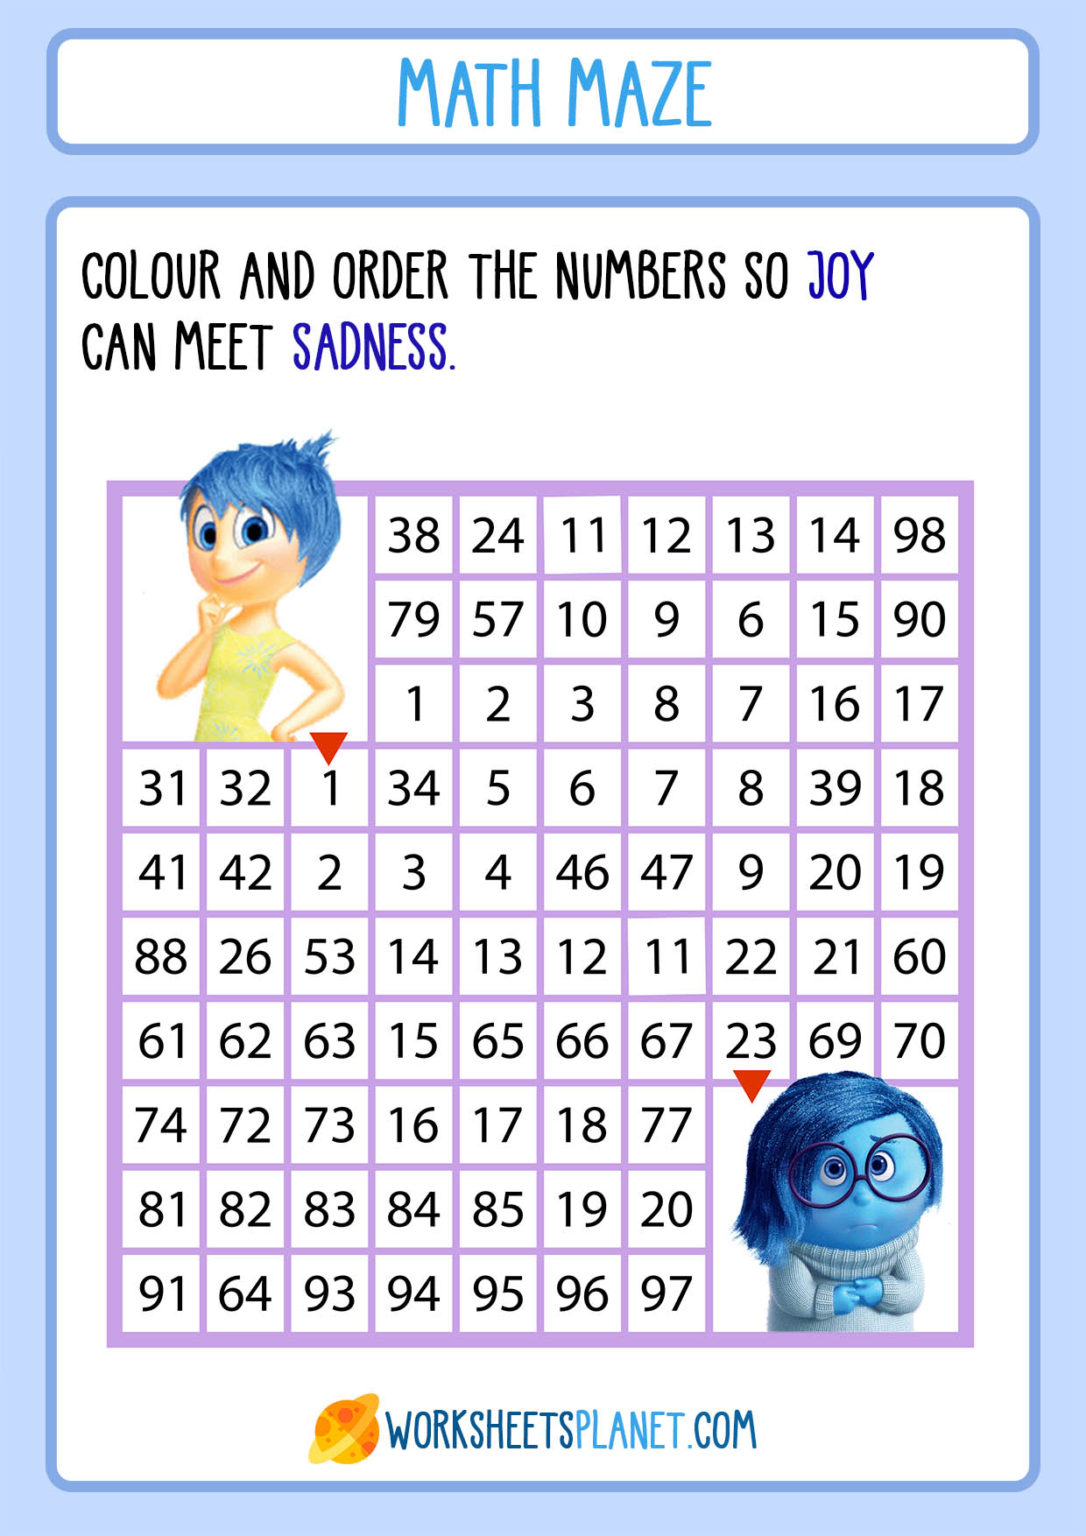 printable-math-maze-games-for-kids-worksheets-planet